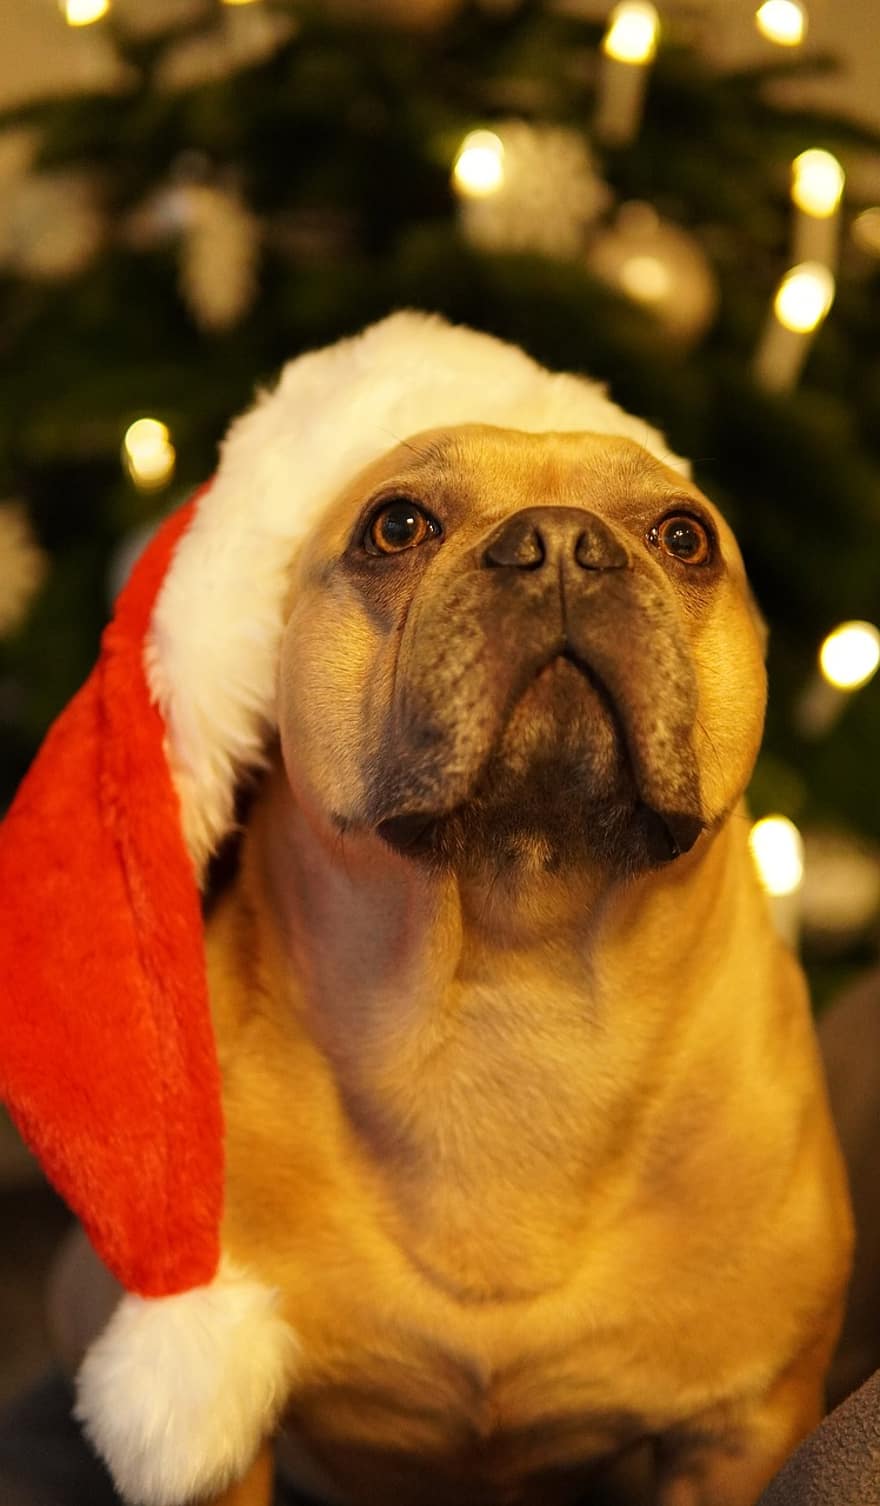 Dog, French Bulldog, Christmas, Happy Holiday, Weary, Eyes Closed, Santa Hat, Christmas Tree, Fir Tree, Greeting Card, Cute